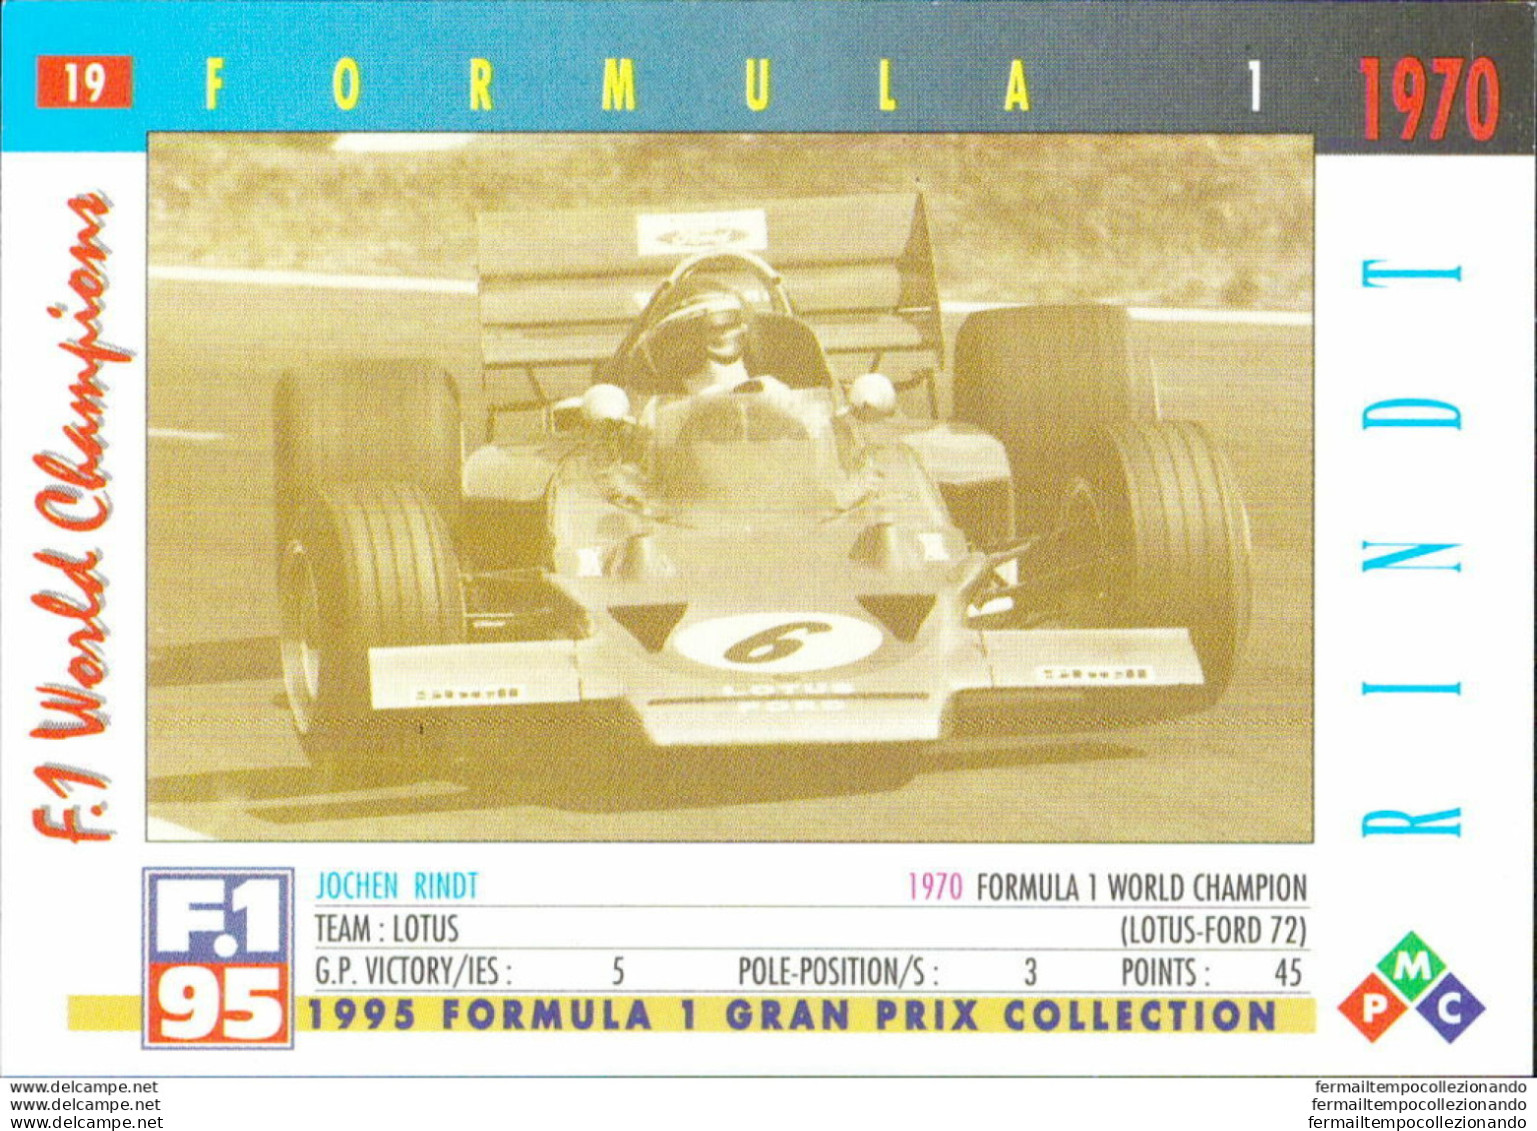 Bh19 1995 Formula 1 Gran Prix Collection Card Rindt N 19 - Cataloghi